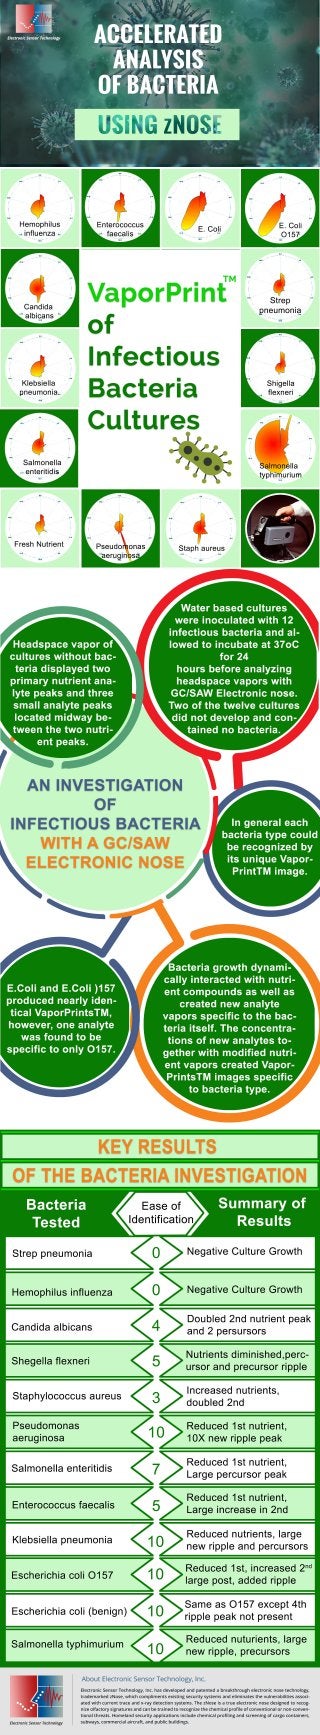 Analysis of bacteria using zNose